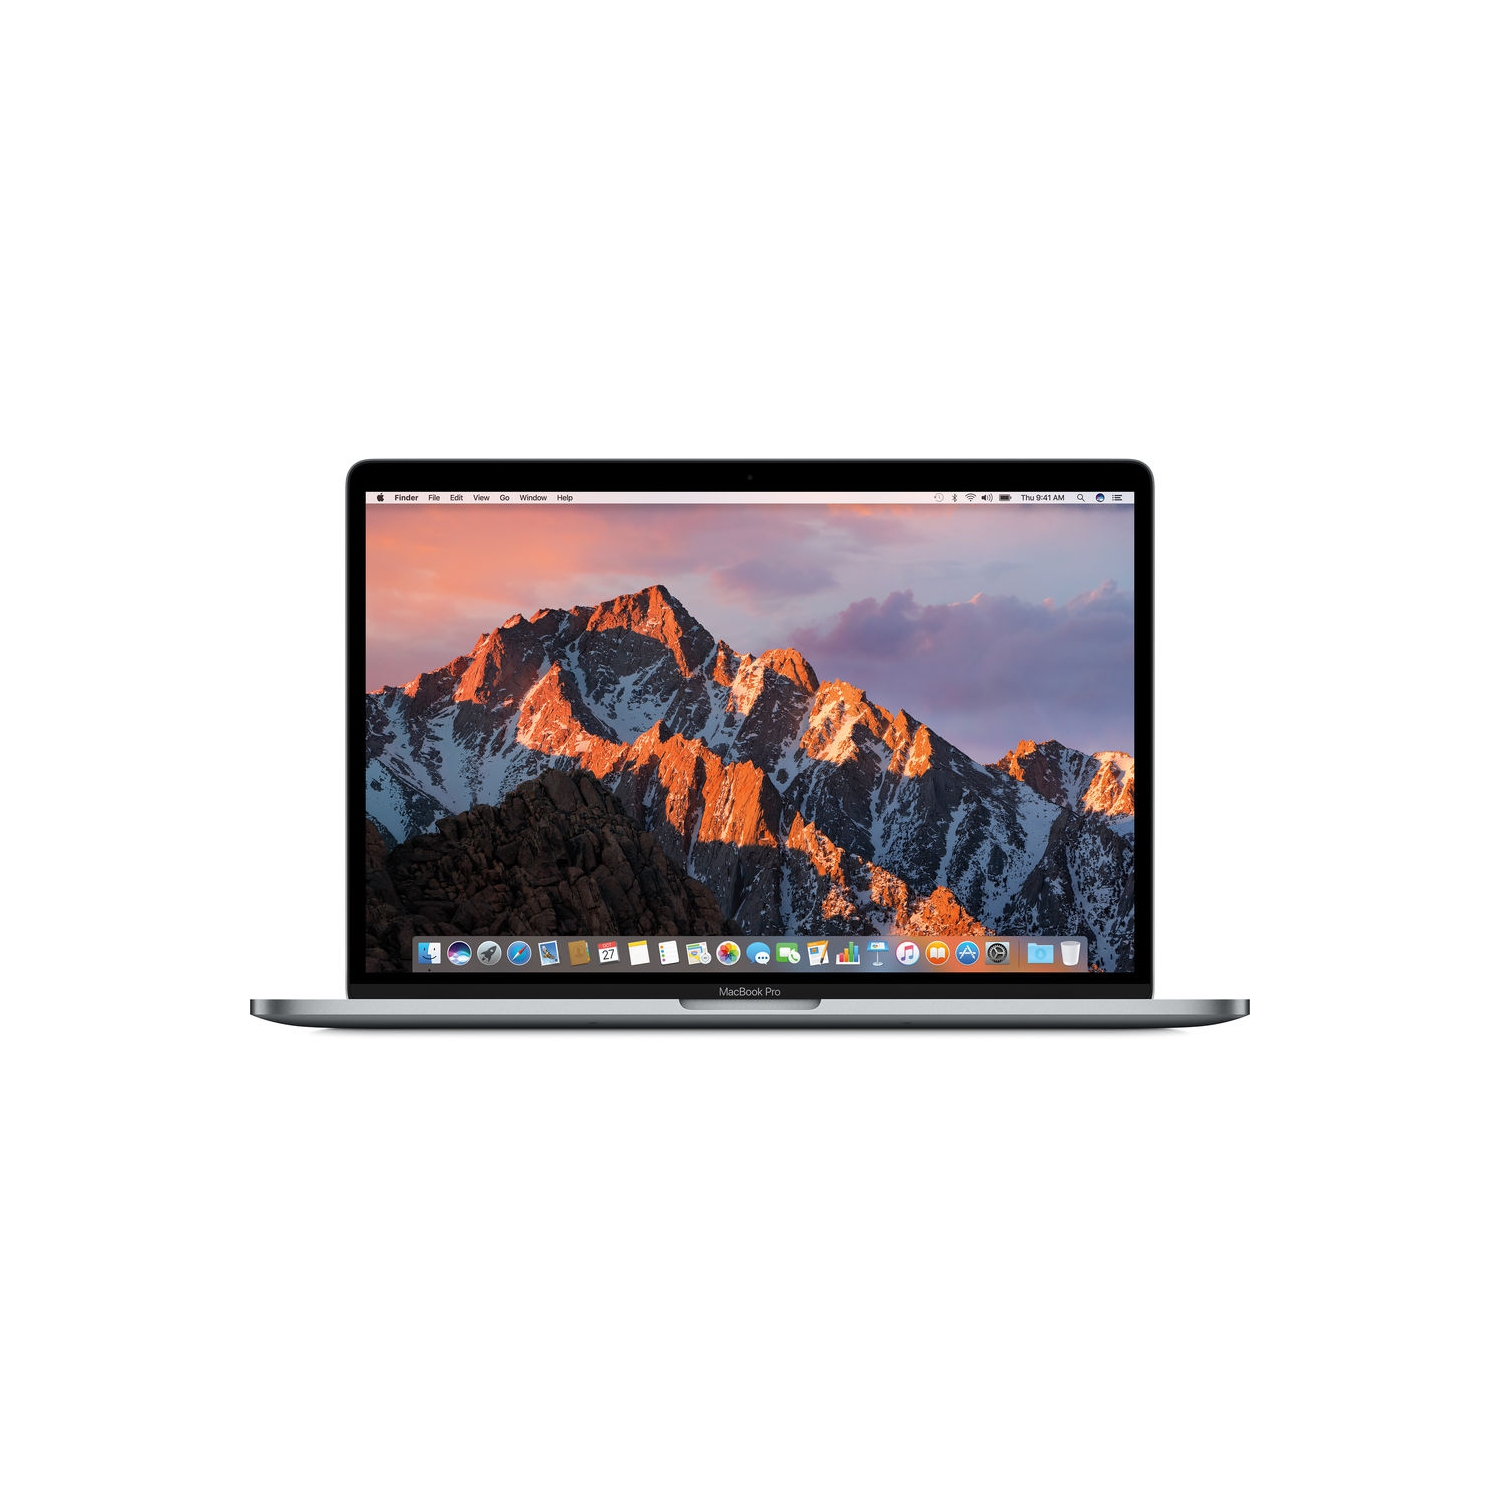 Apple MacBook Pro 15" 2017 - Intel Core i7 - 2.8GHz - 256GB SSD - 16GB RAM - Touch Bar + ID - MPTR2LL/A Space Gray - Refurbished